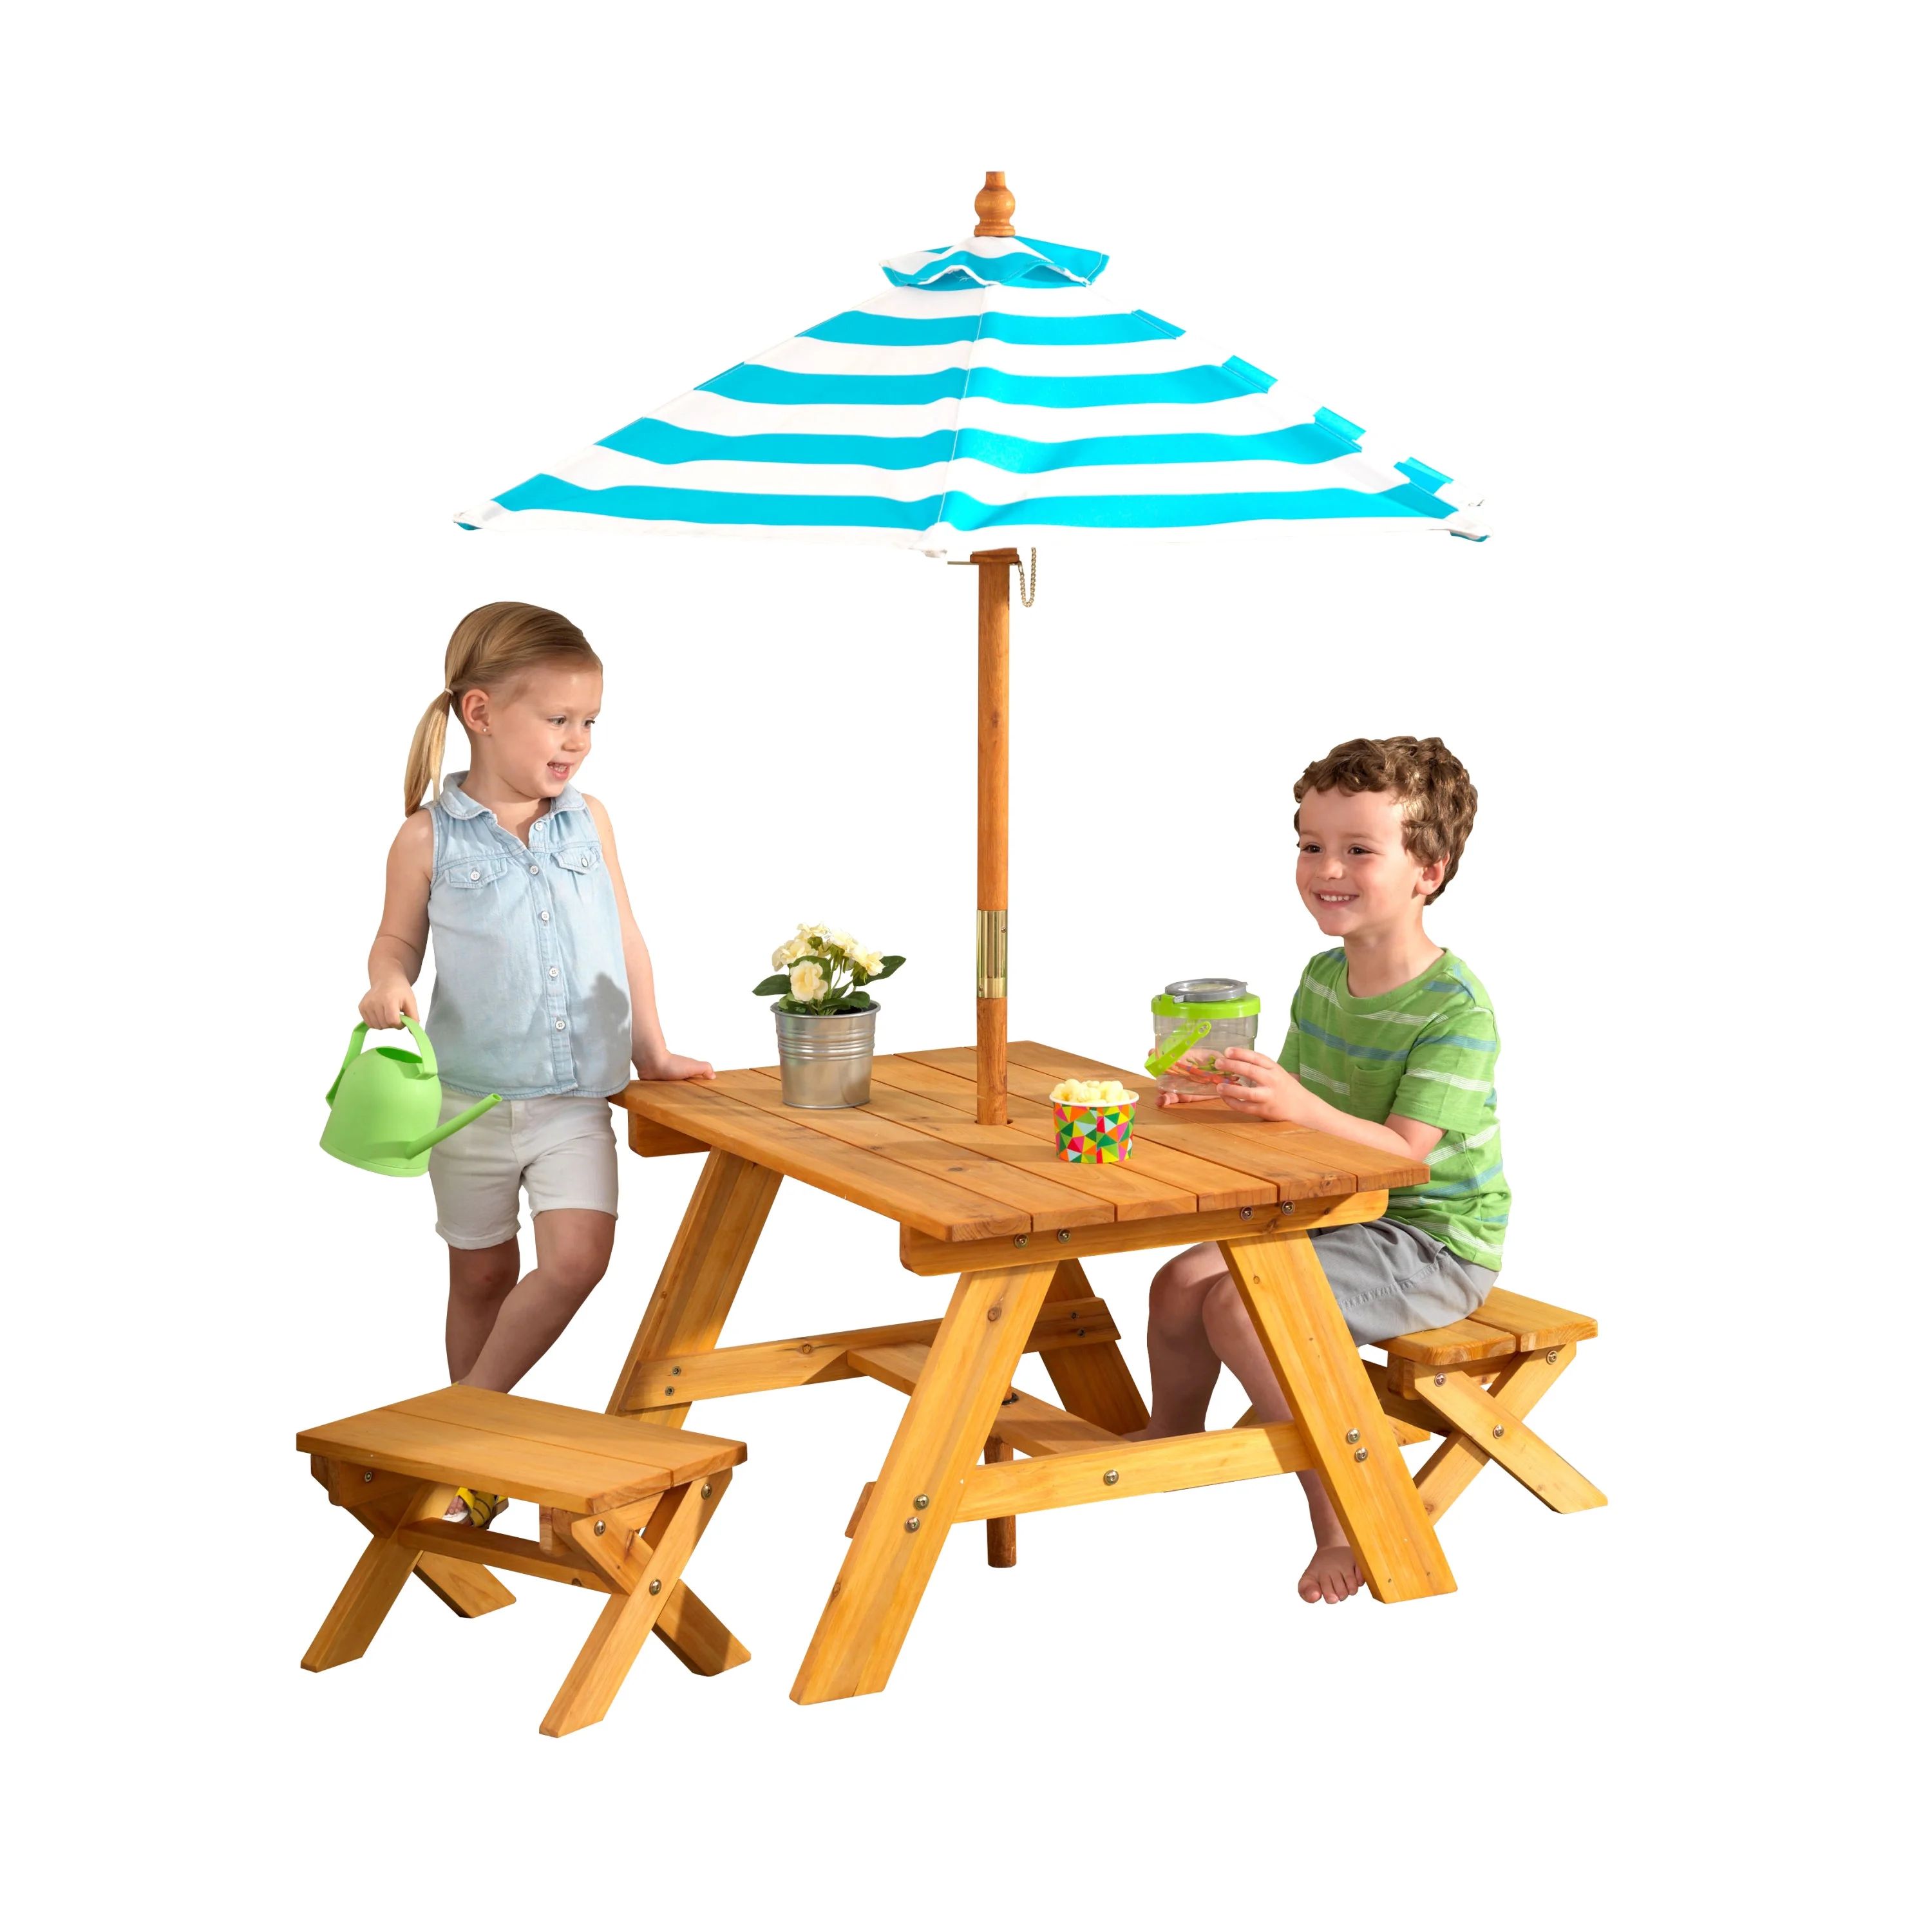 KidKraft Outdoor Wooden Table & Bench Set, Striped Umbrella, Turquoise and White - Walmart.com | Walmart (US)